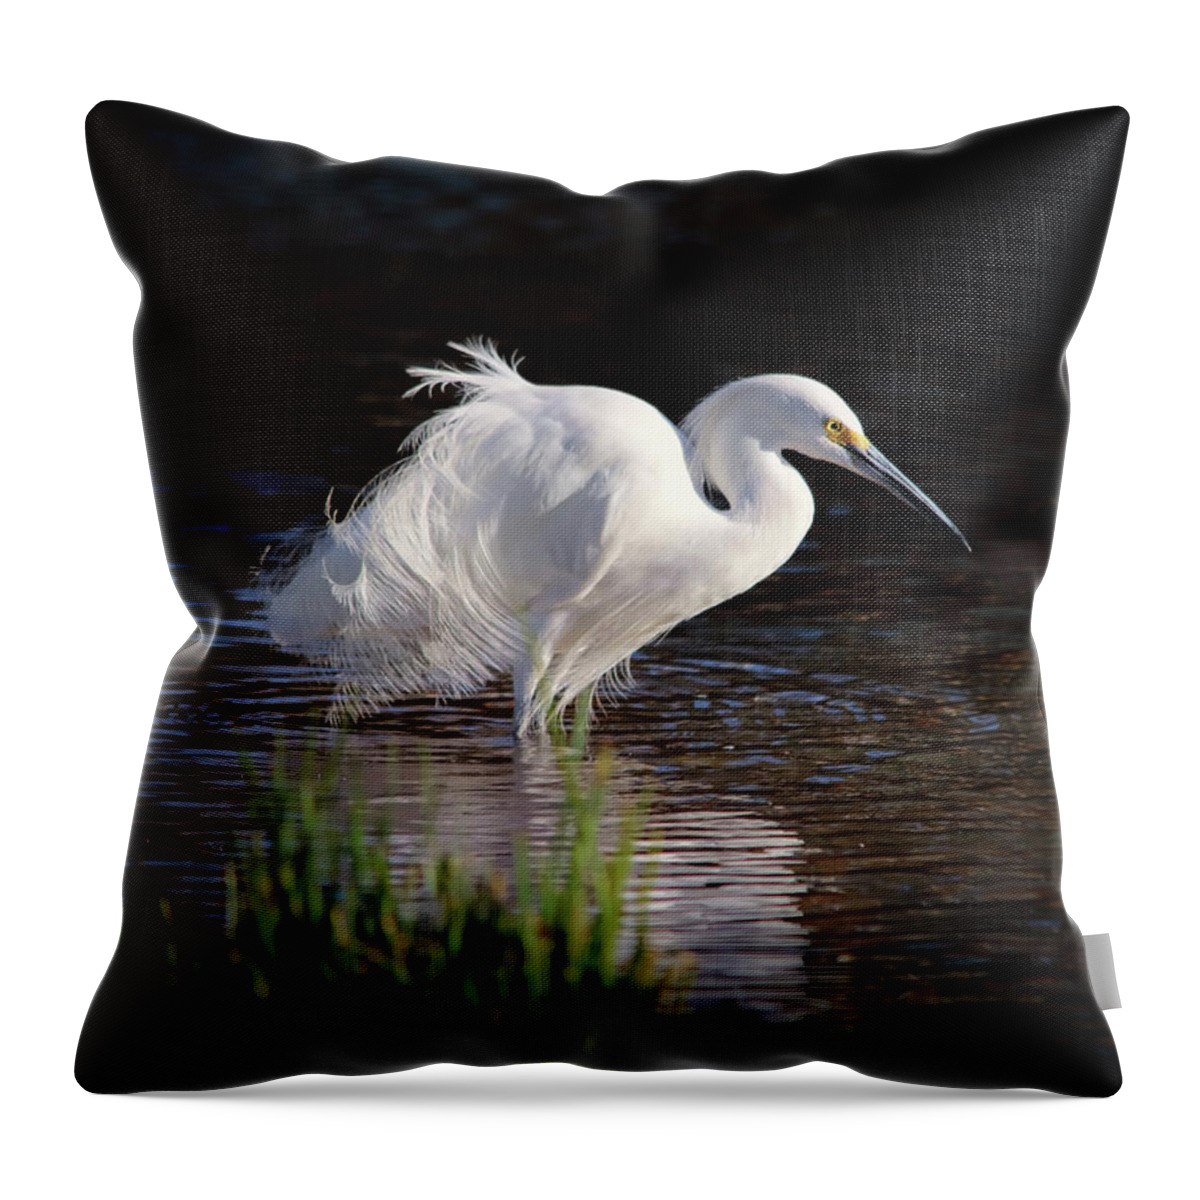 Wild Birds Throw Pillow featuring the photograph Egret by Elaine Malott